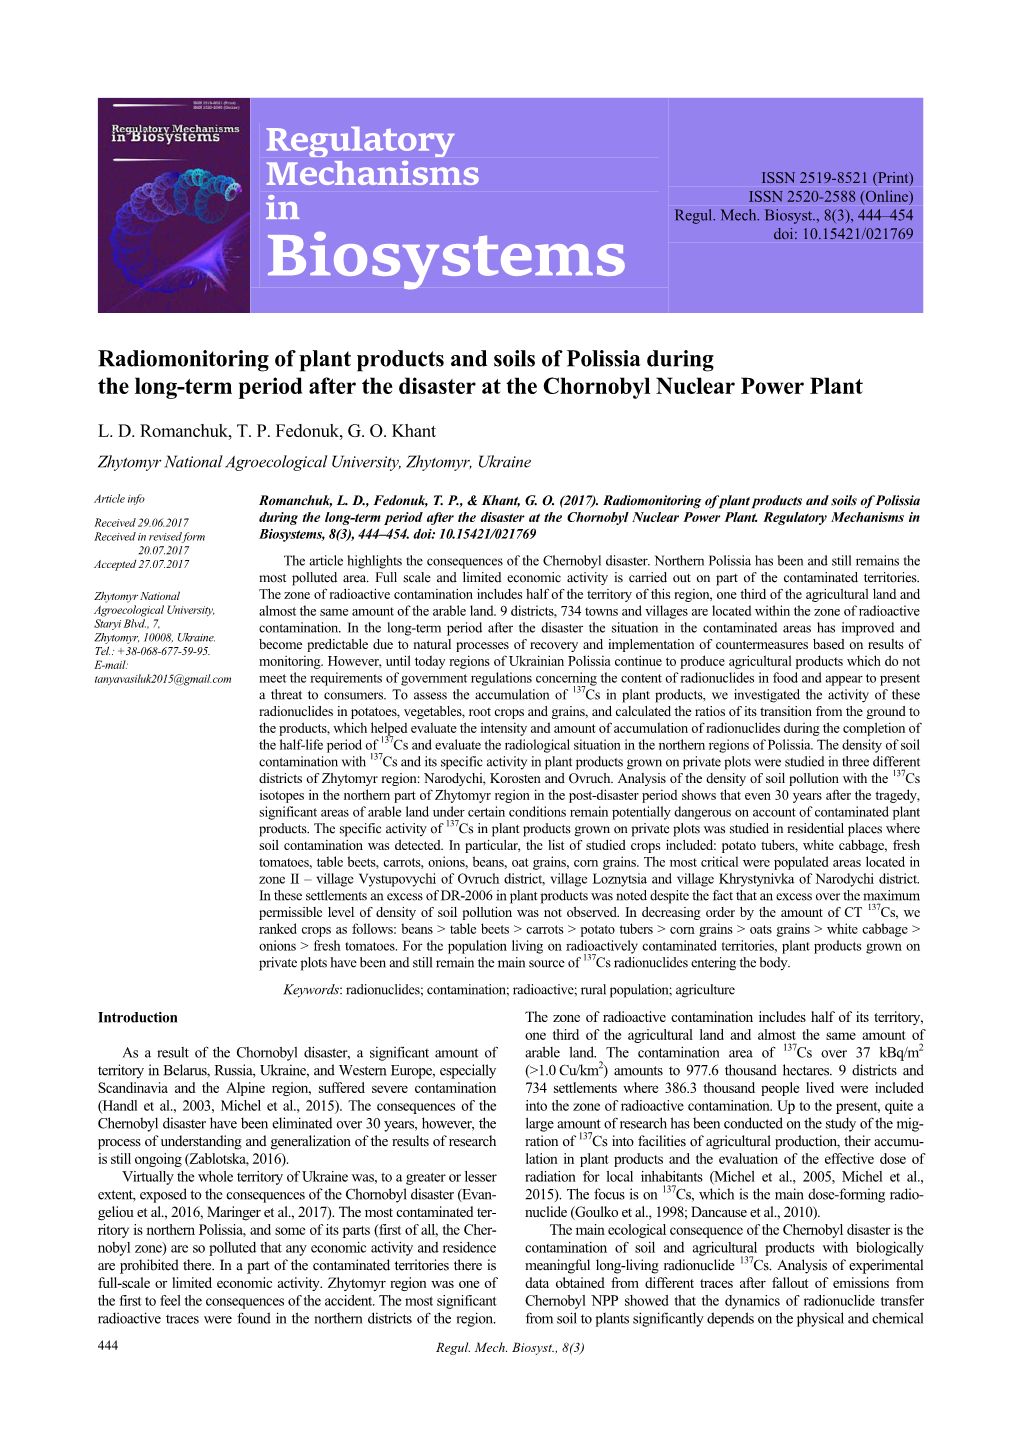 Biosystems Diversity